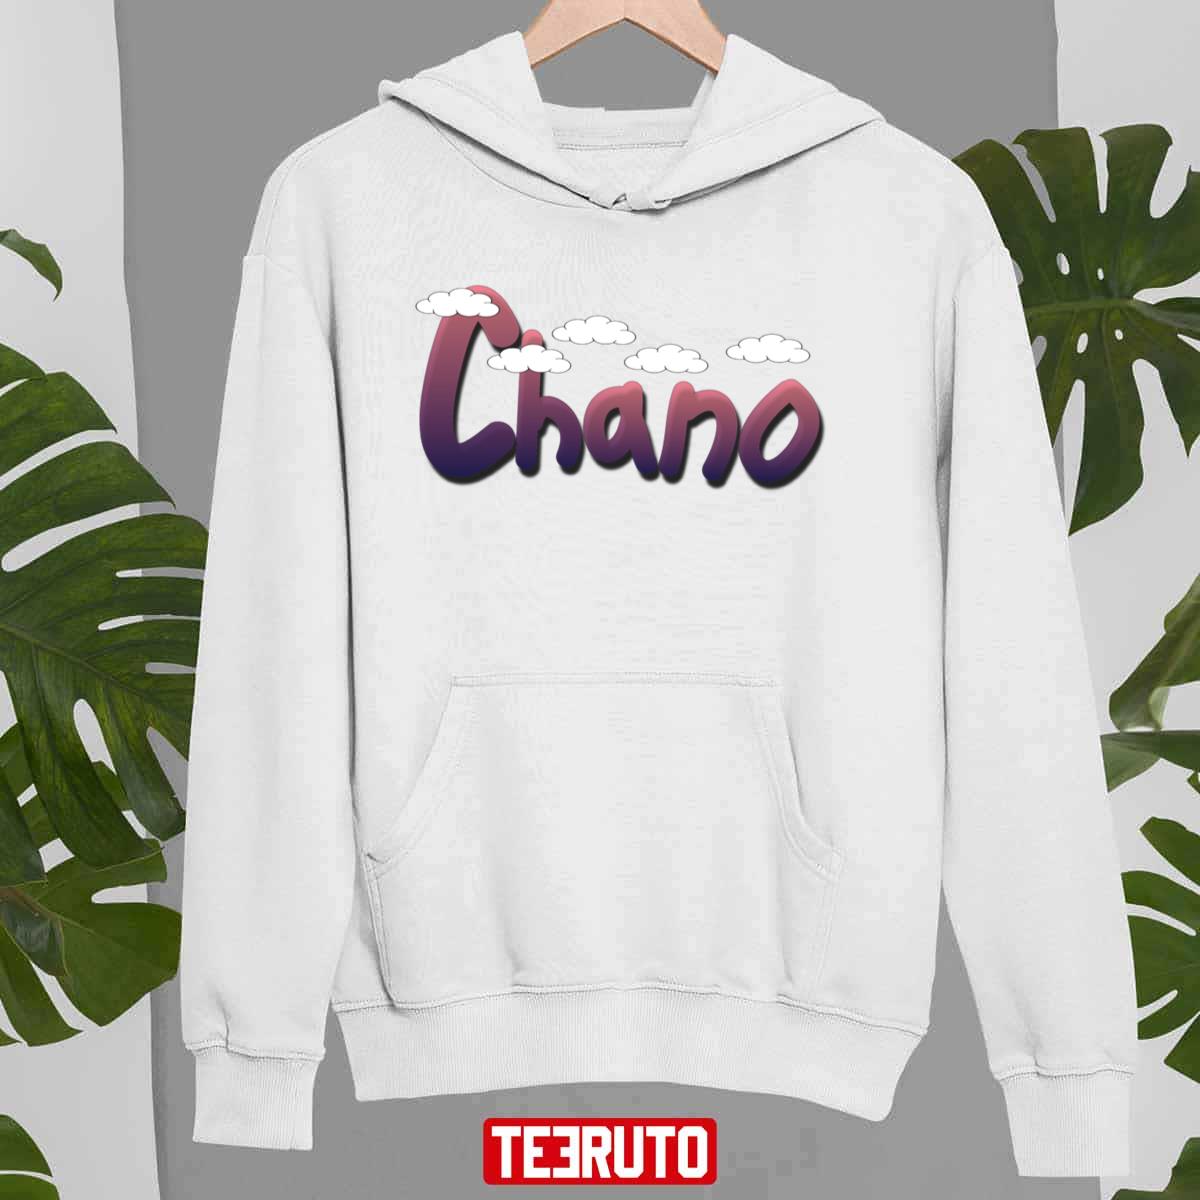 Chano Chance The Rapper Art Unisex T-shirt